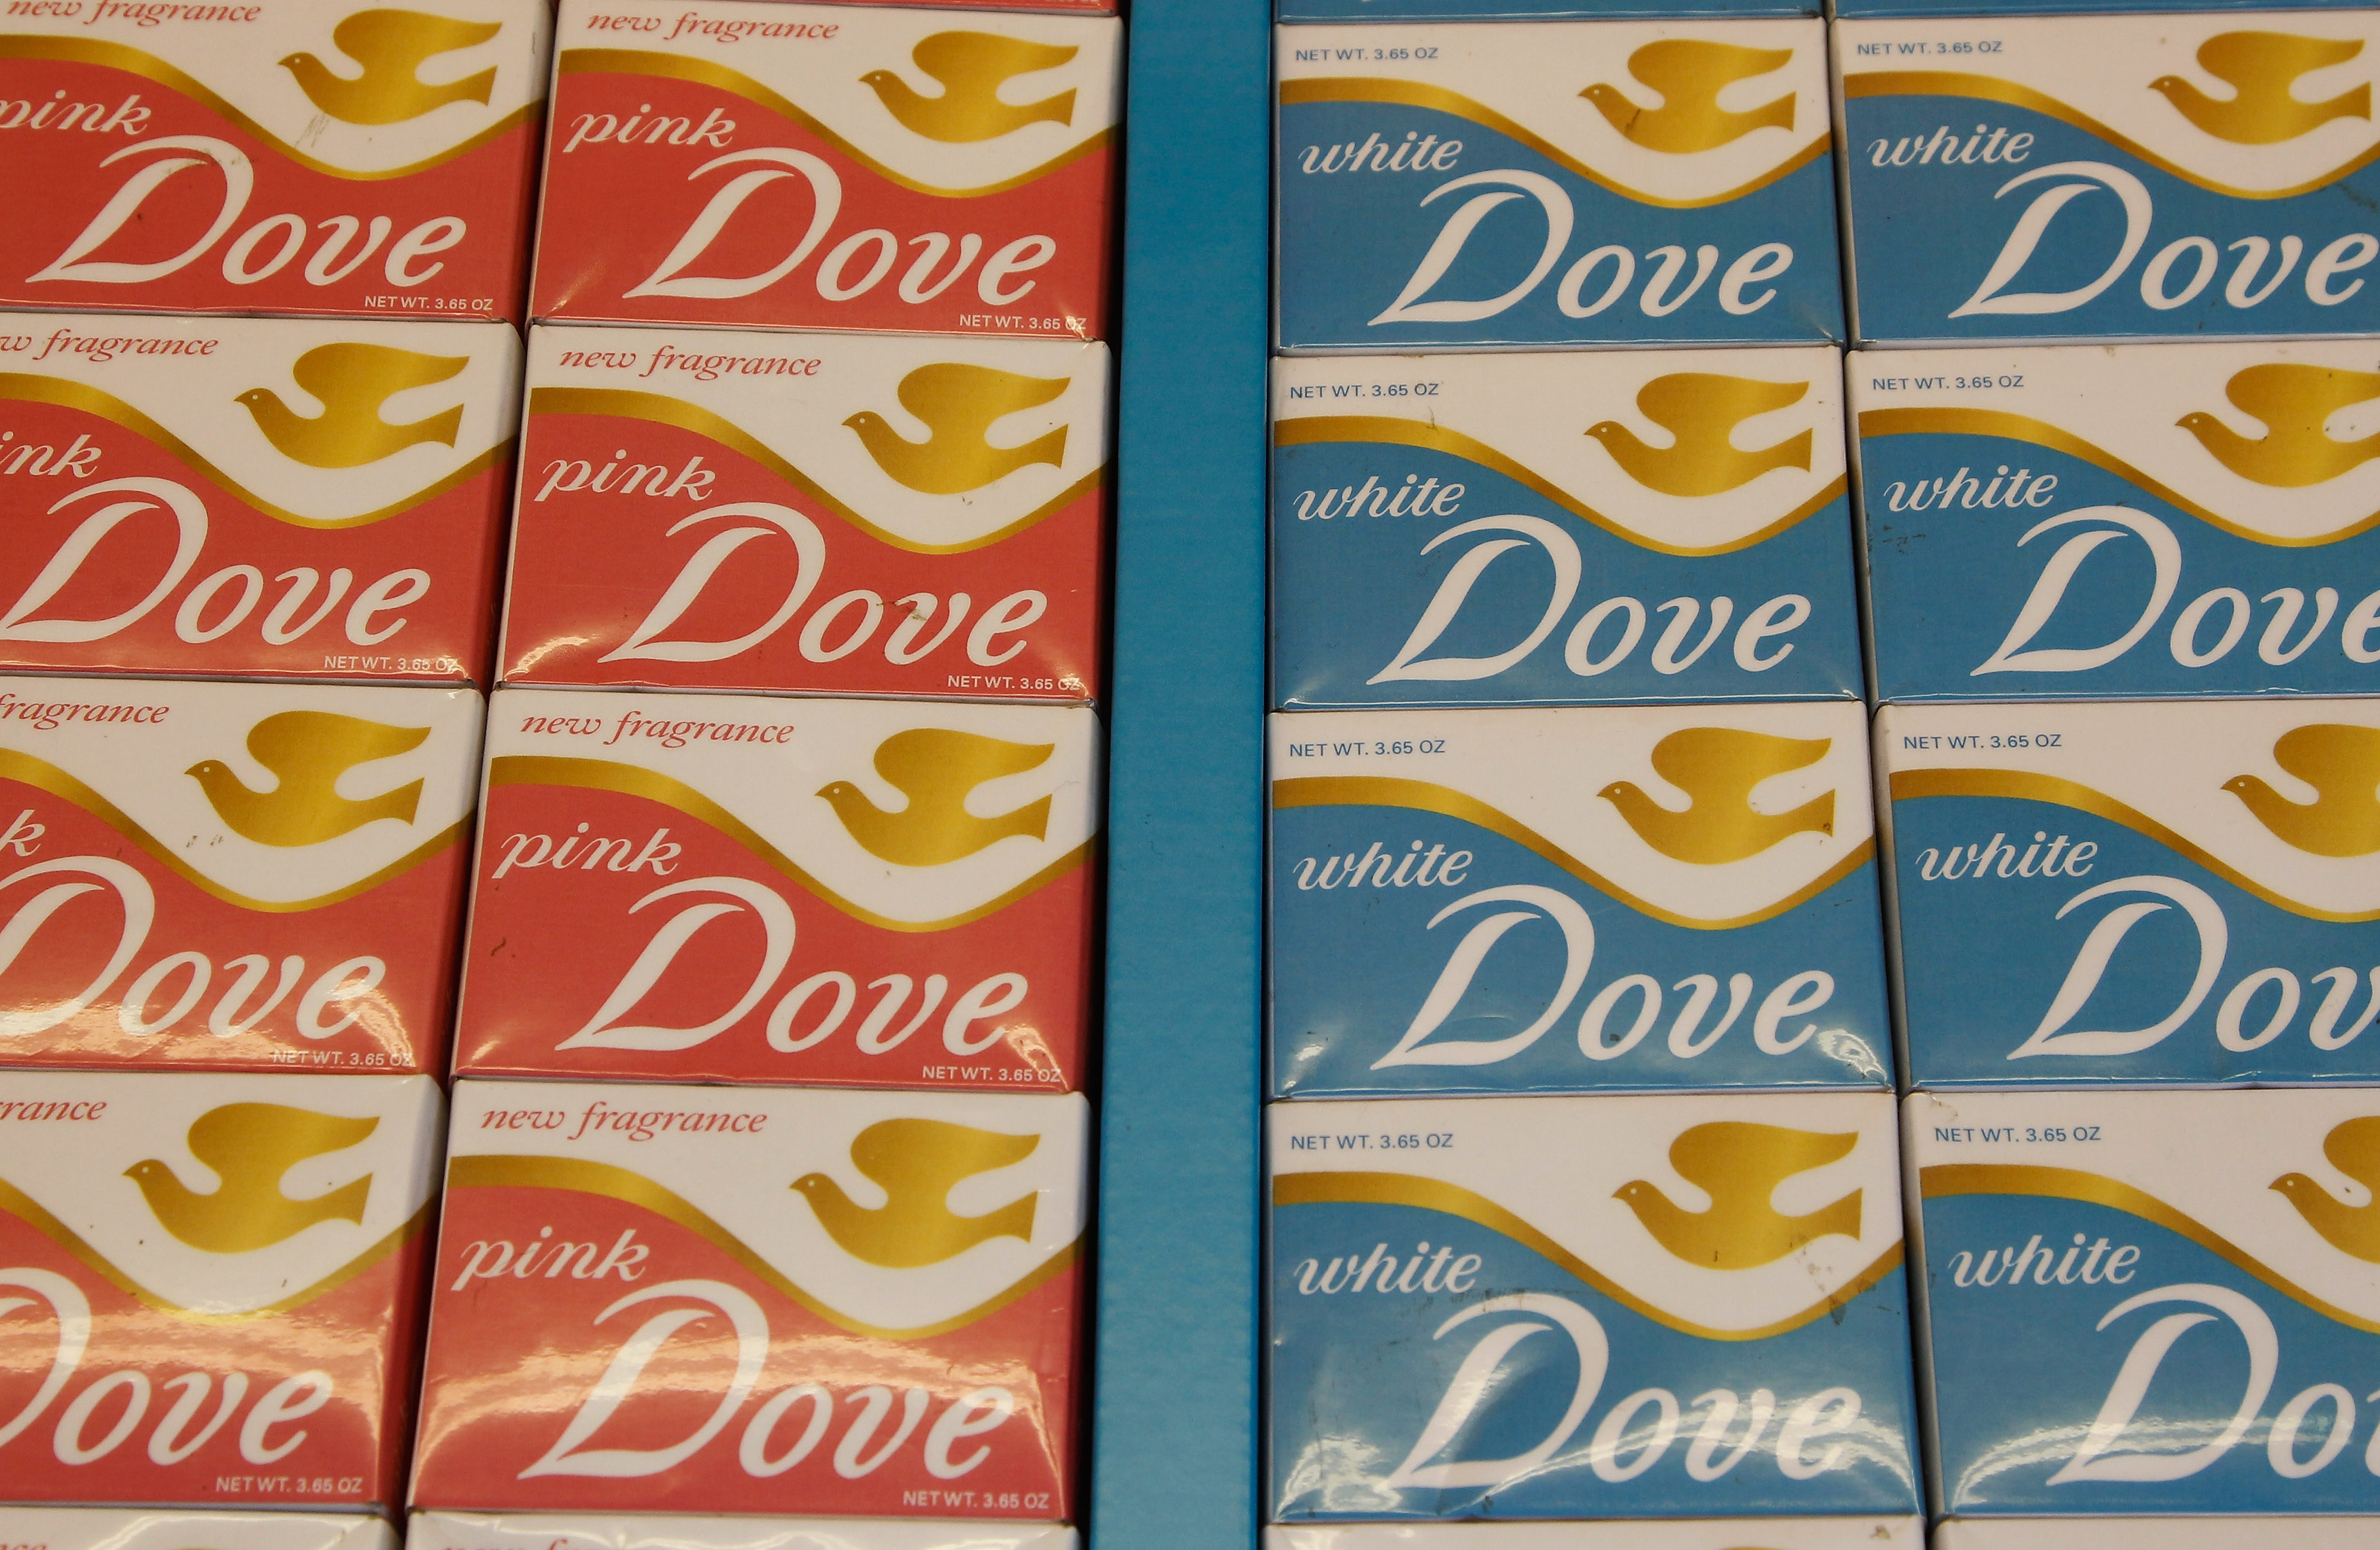 Dove soap at a supermarket